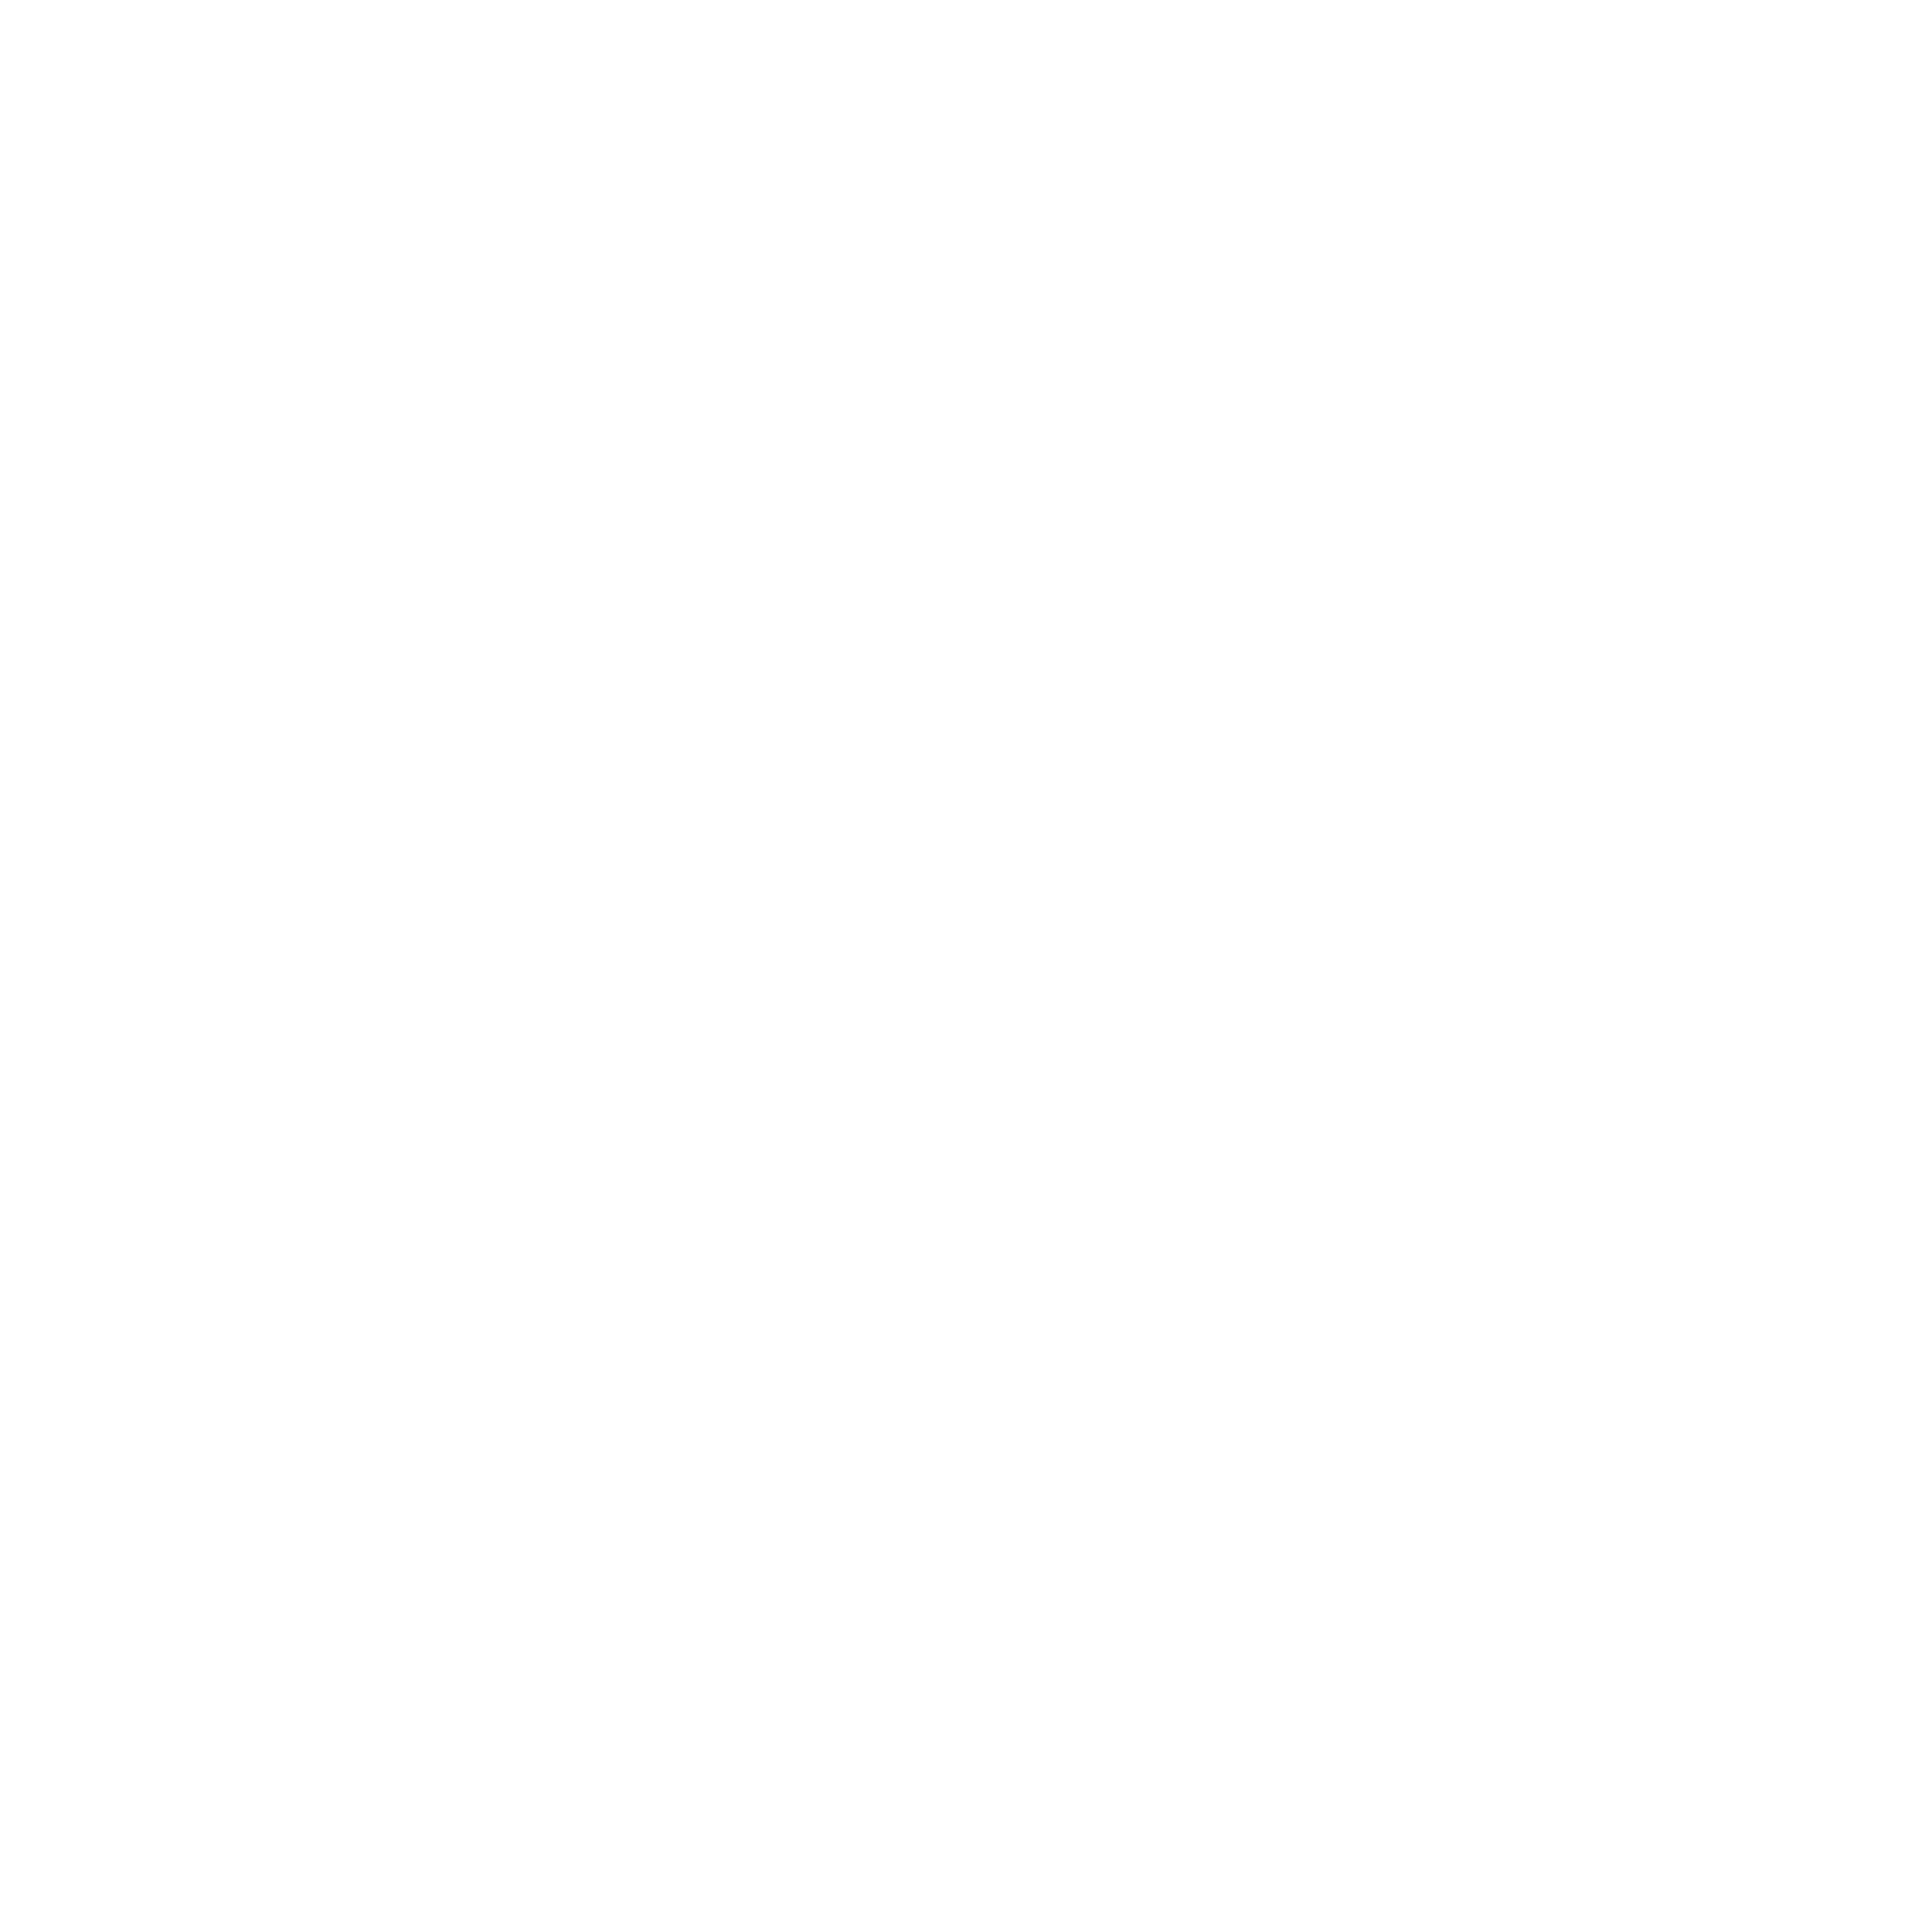 Sysnet logo